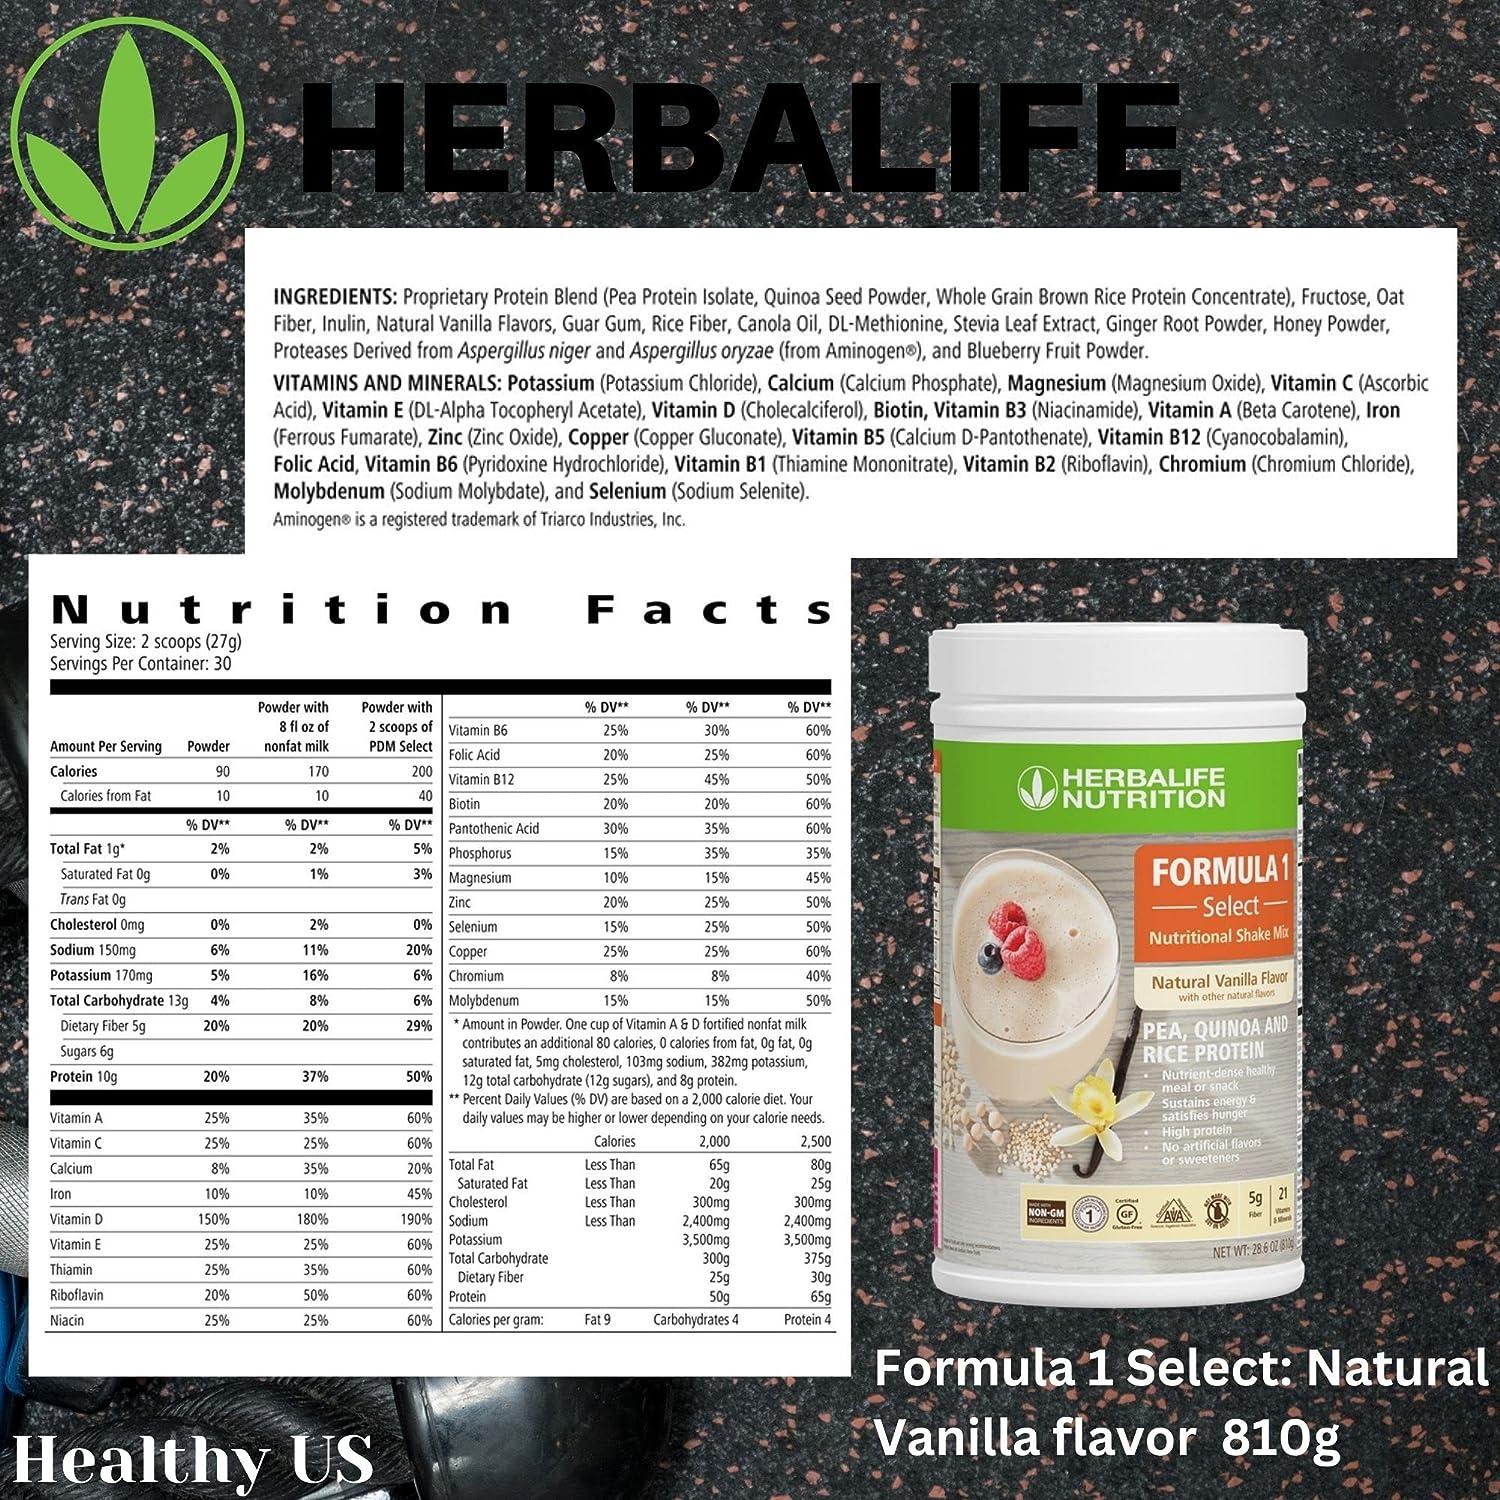 Herbalife Formula 1 Select Nutritional